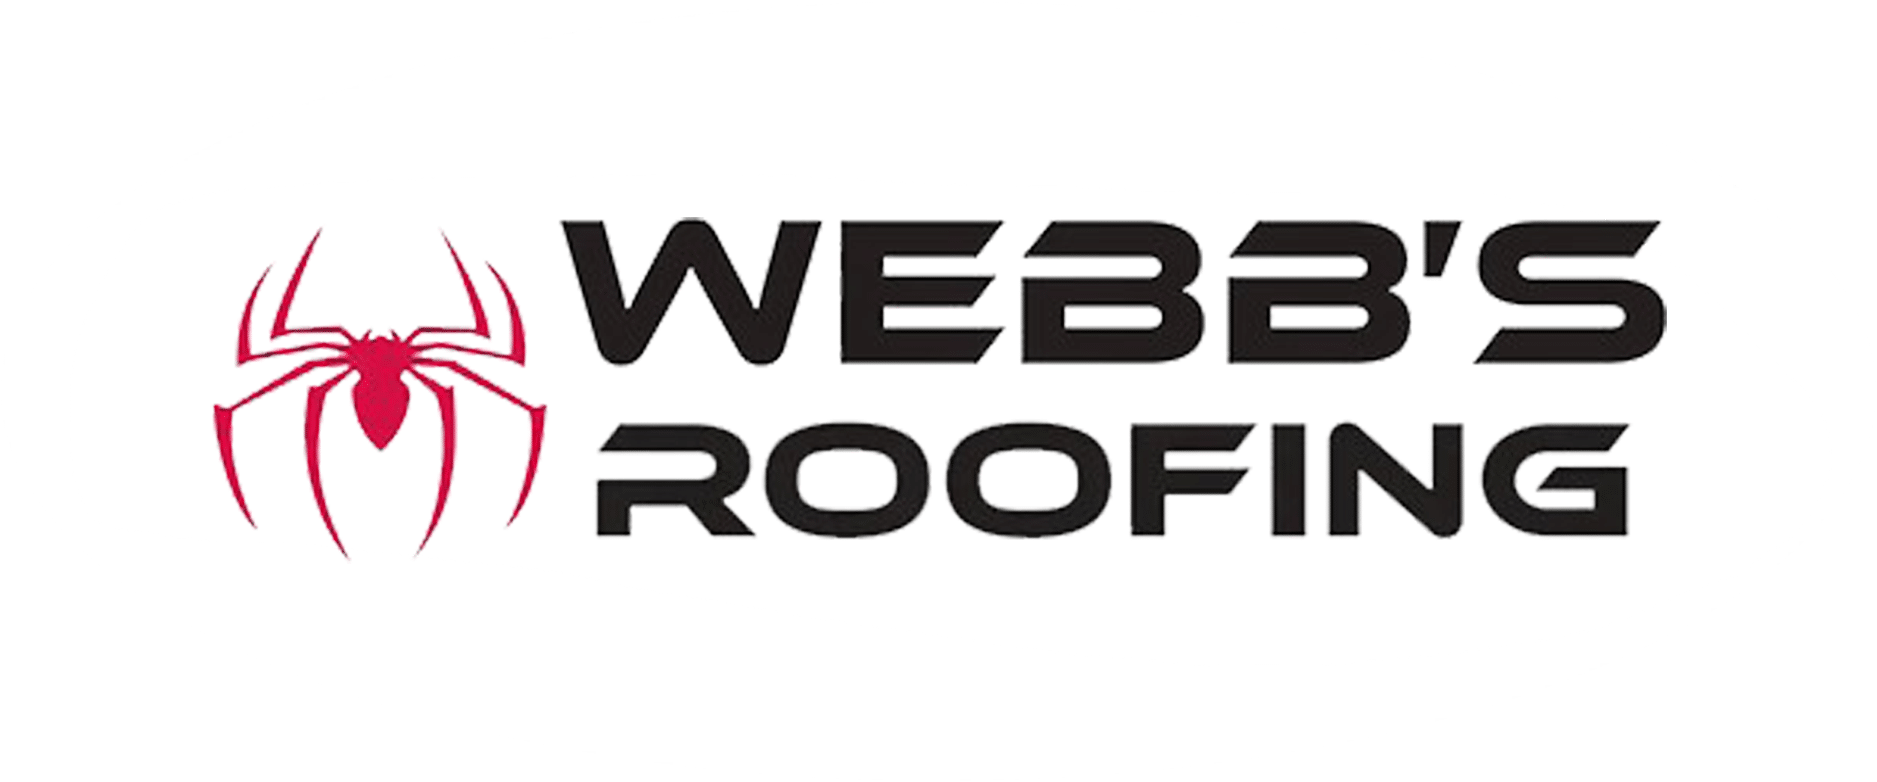 Webbs Roofing